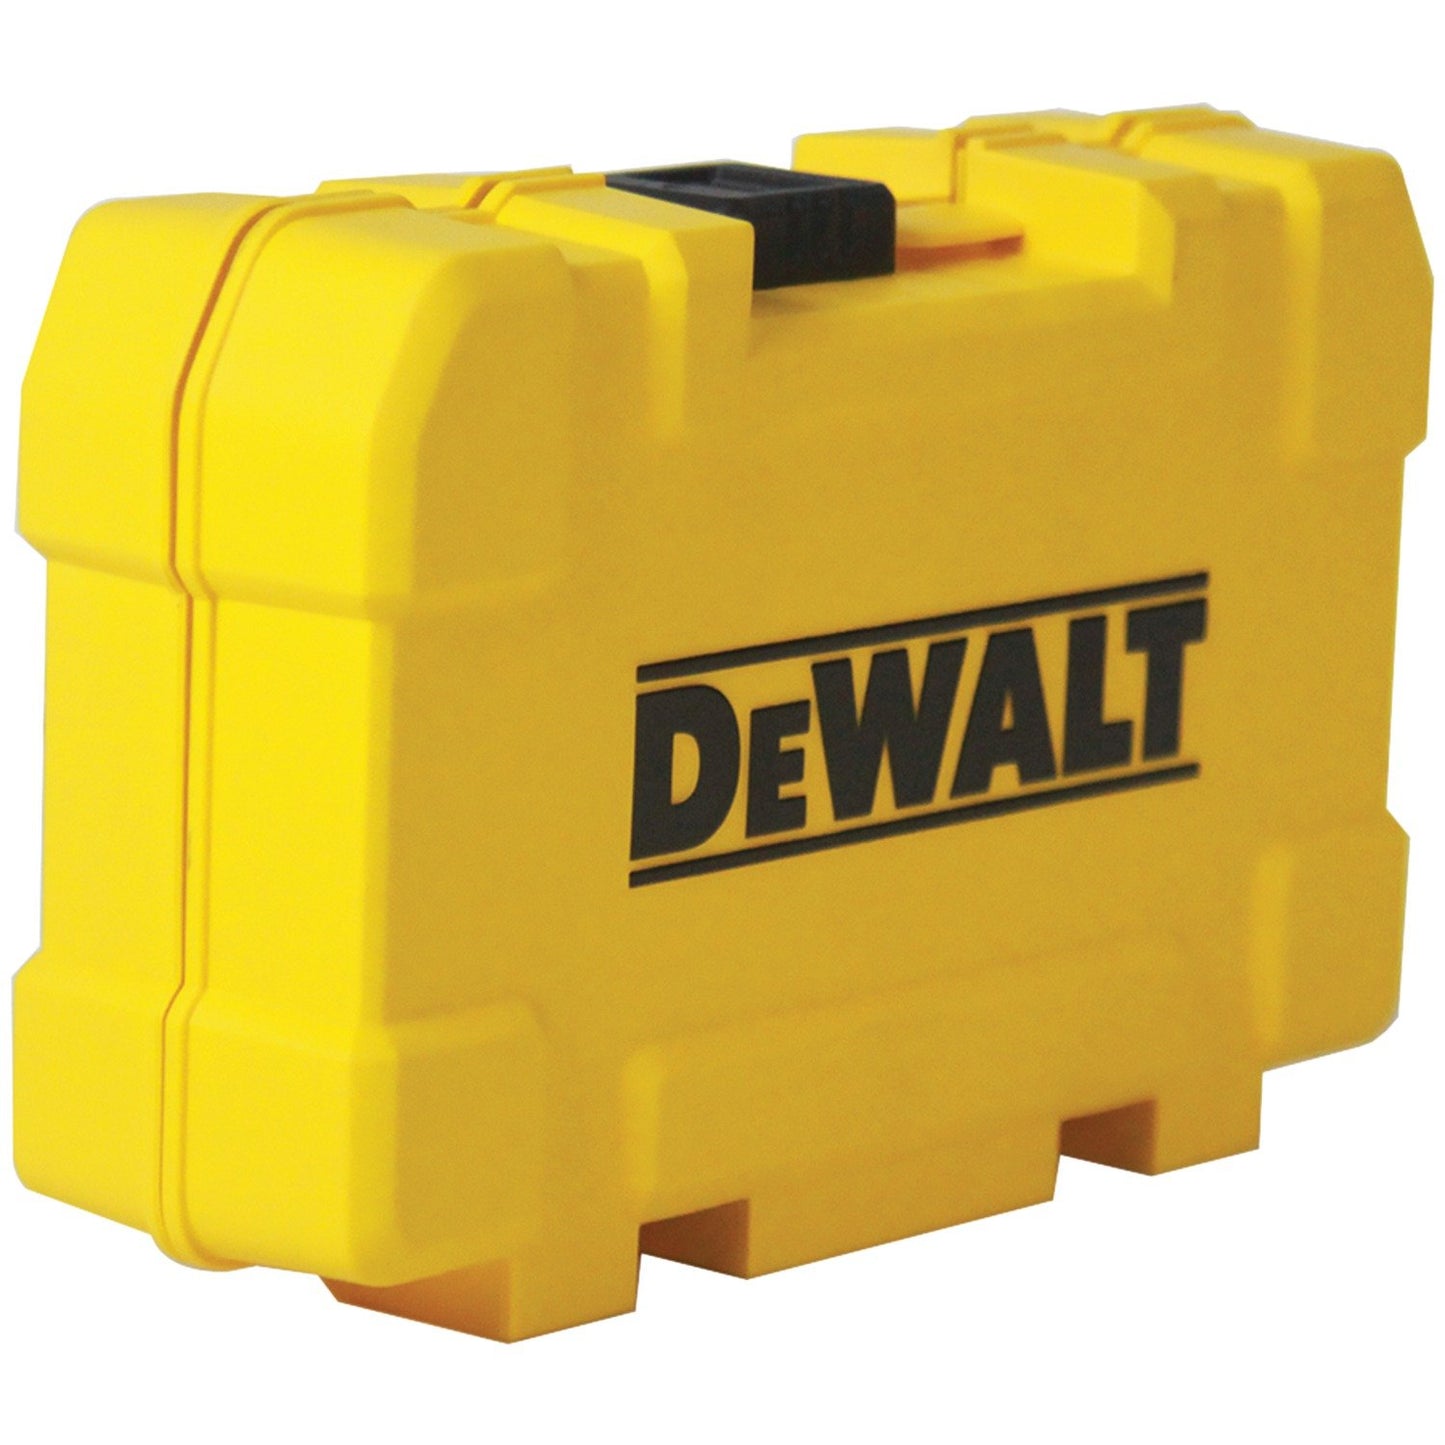 Dewalt DW2163 37-Piece Screwdriver Bit Set